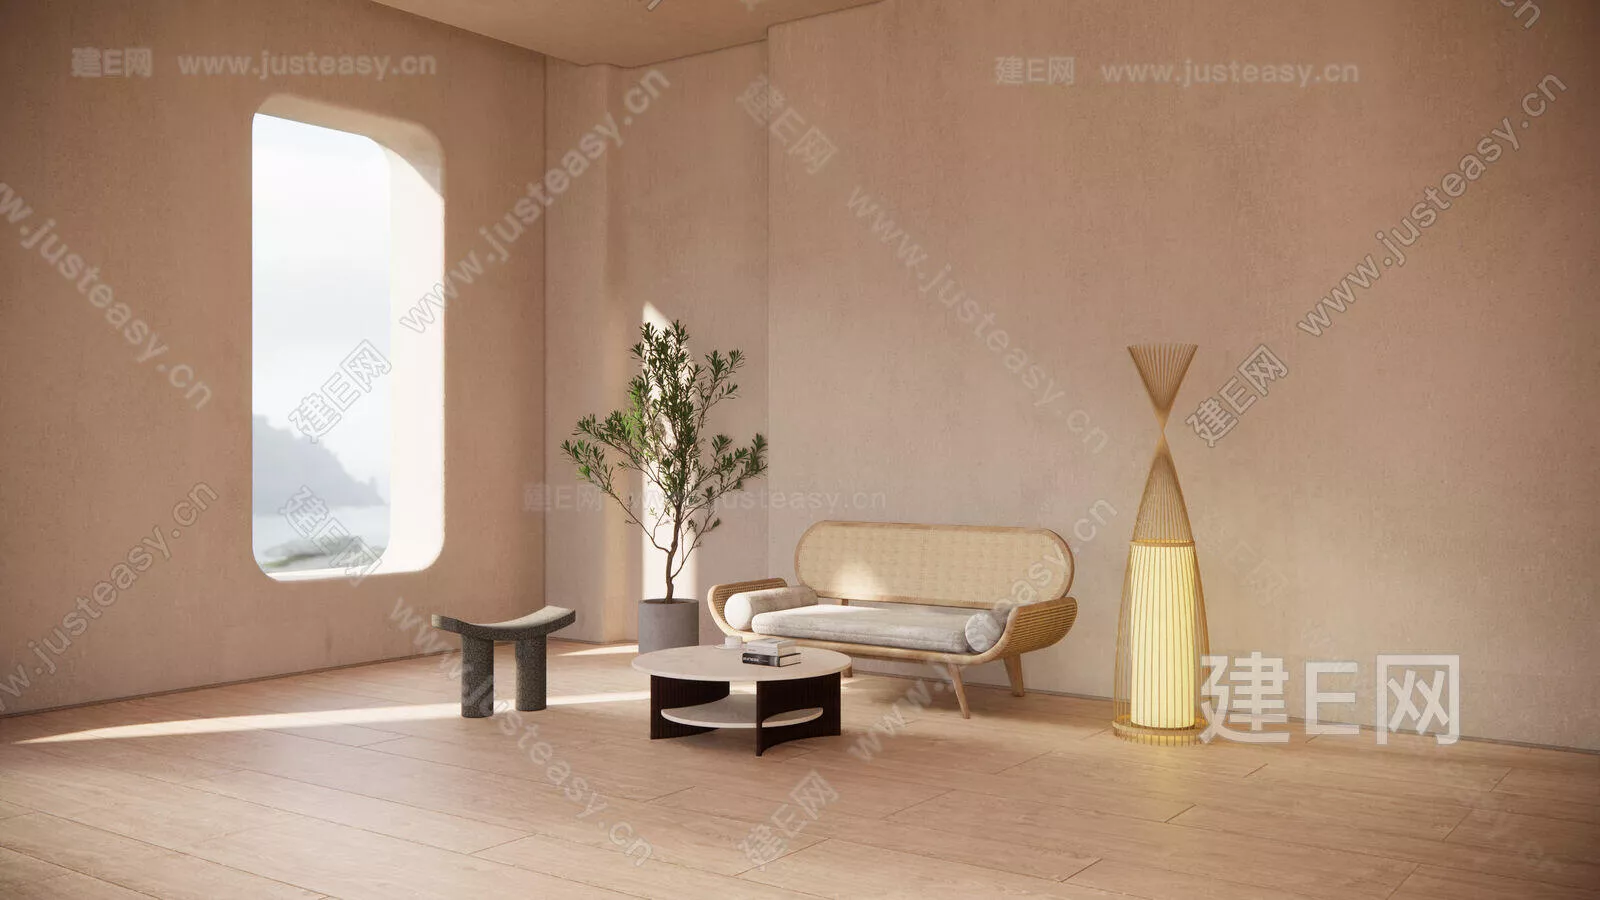 JAPANESE LIVING ROOM - SKETCHUP 3D SCENE - ENSCAPE - 115623322